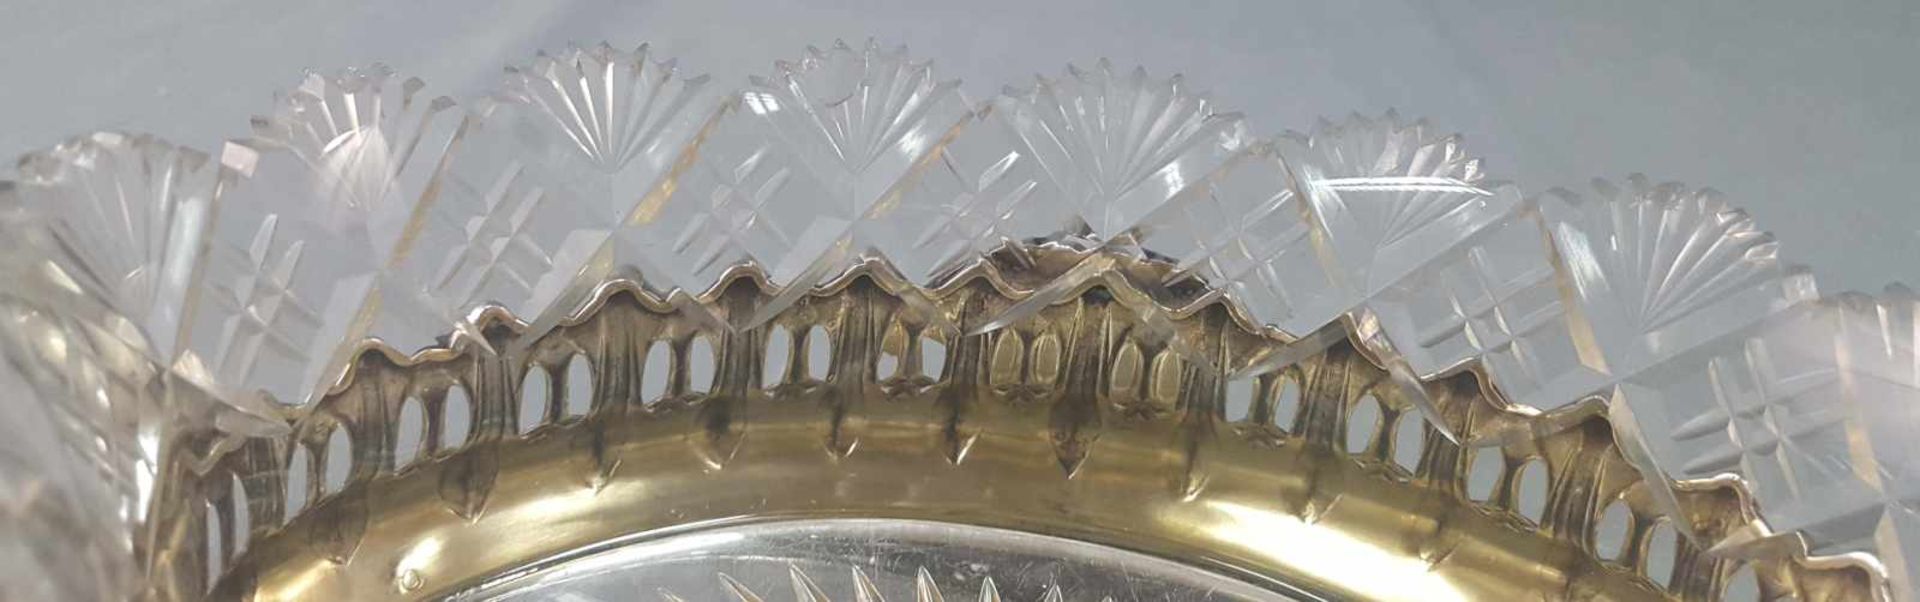 Jardiniere. Silver with original lead crystal glas insert. - Bild 3 aus 12